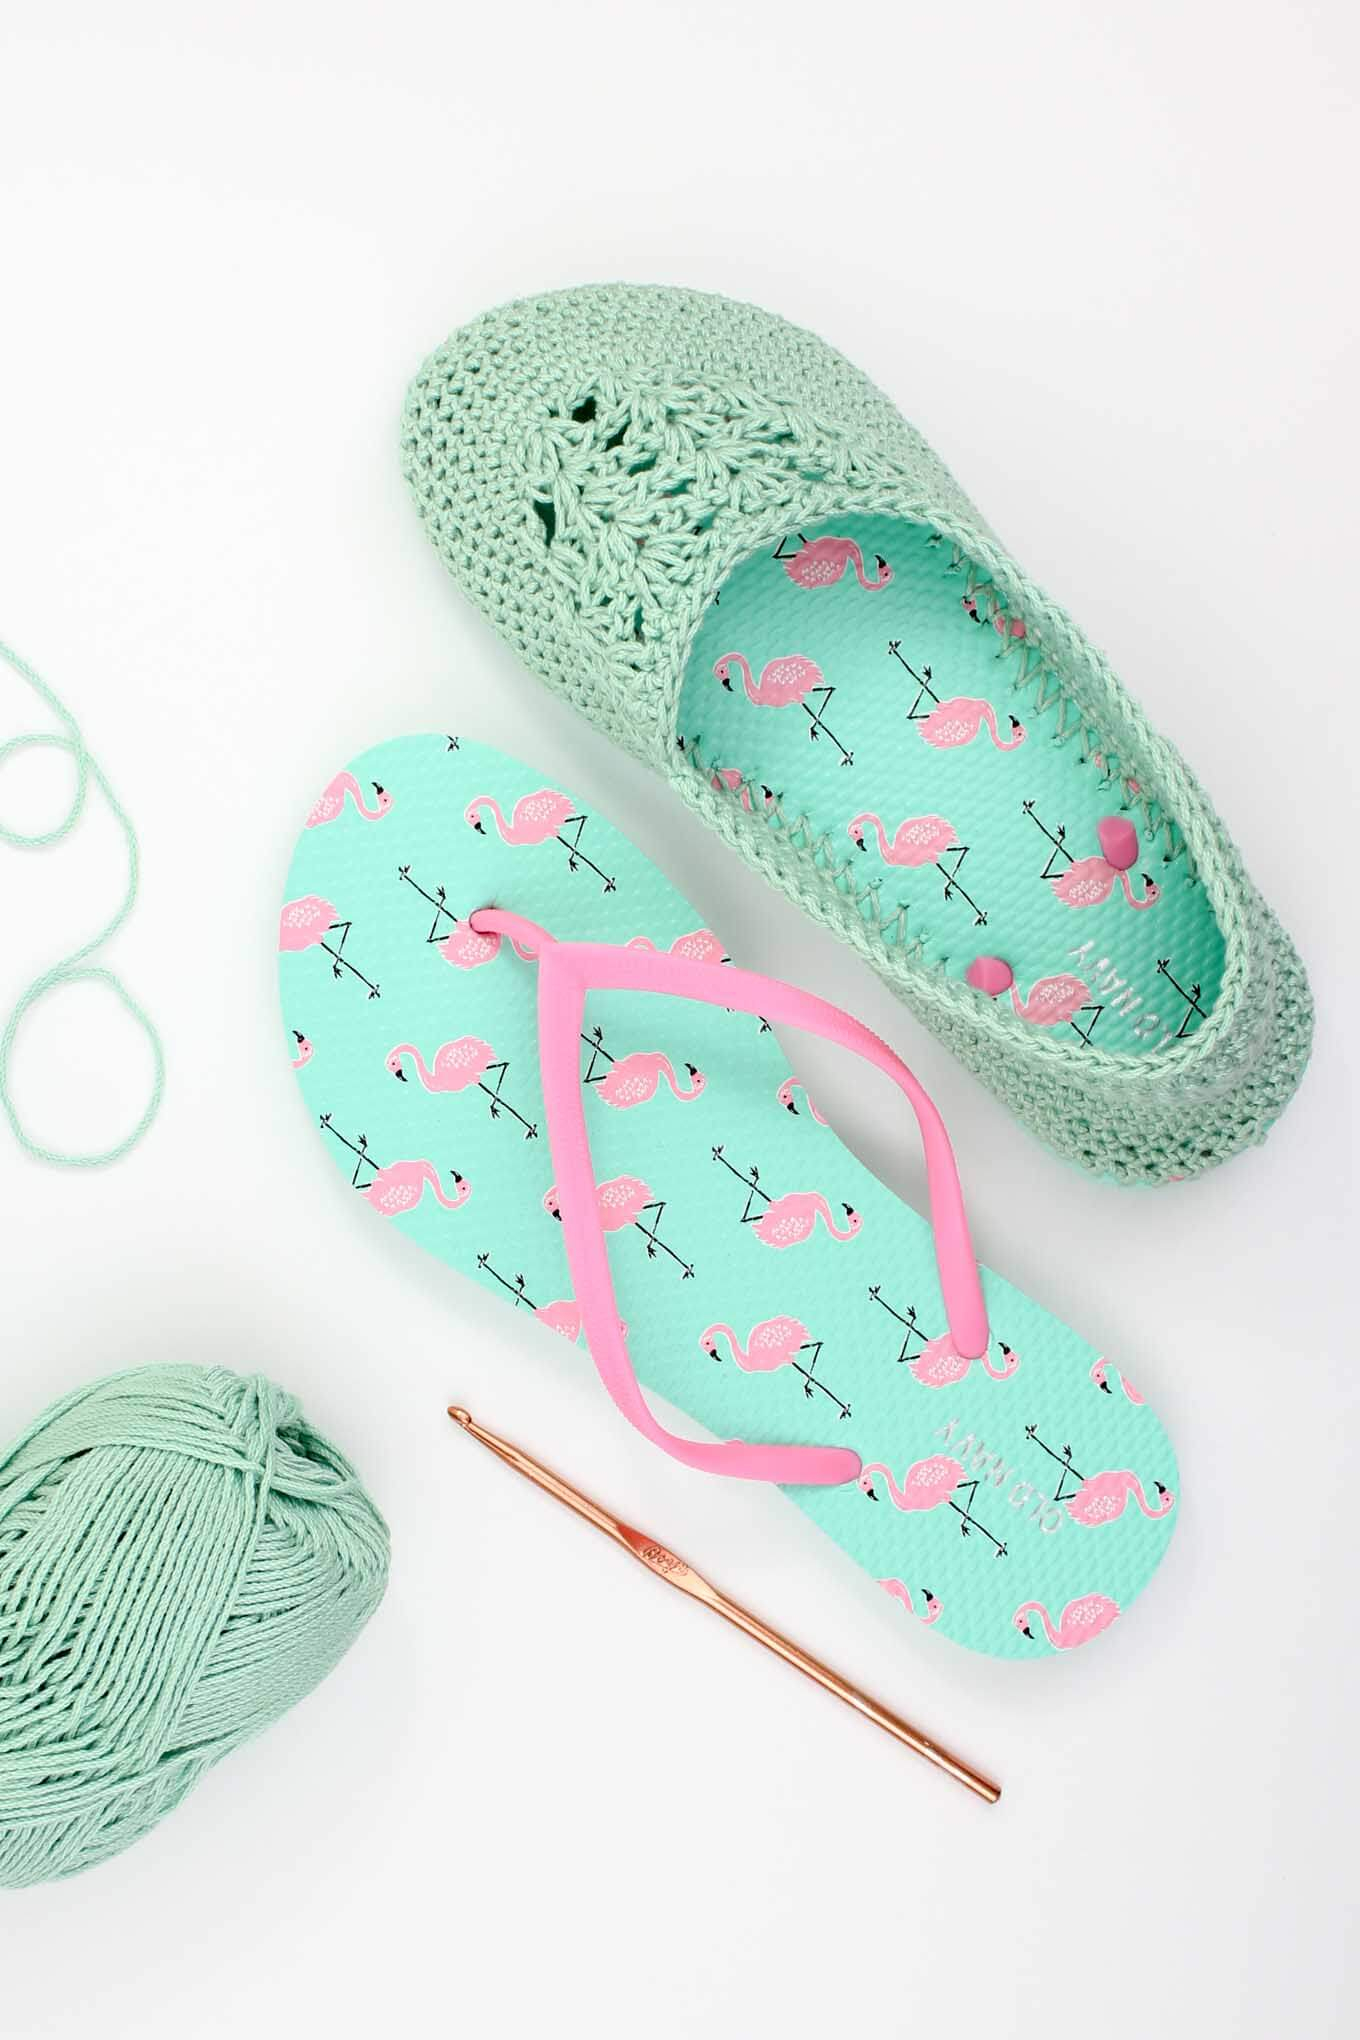 Crochet Shoes Pattern Crochet Slippers With Flip Flop Soles Free Pattern Video Tutorial